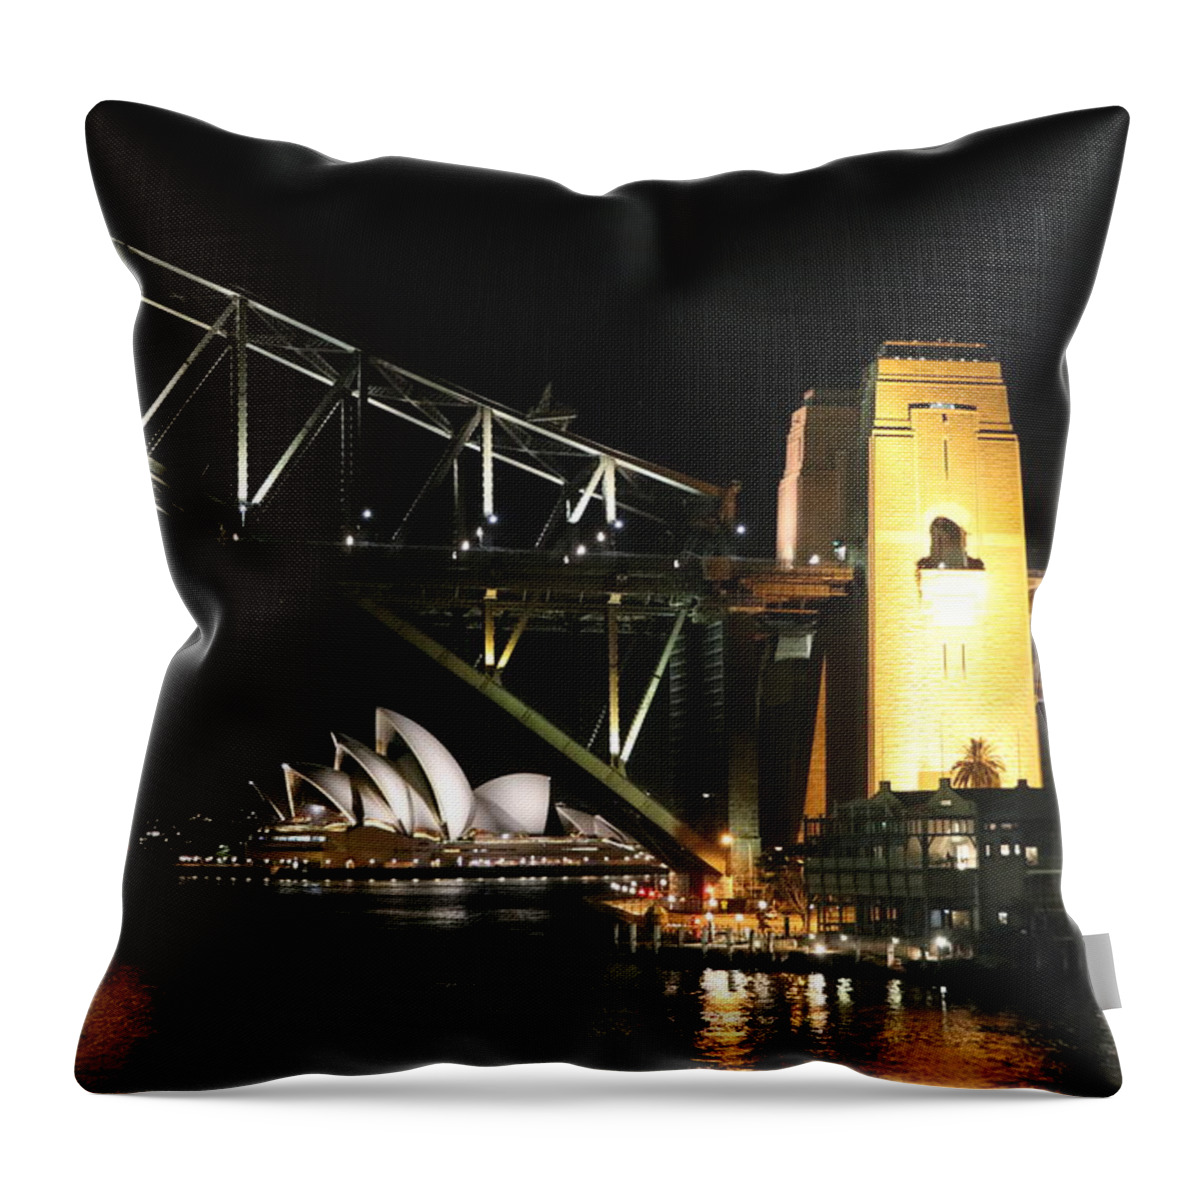 Sydney Australia Throw Pillow featuring the photograph Sydney Australia #41 by Paul James Bannerman